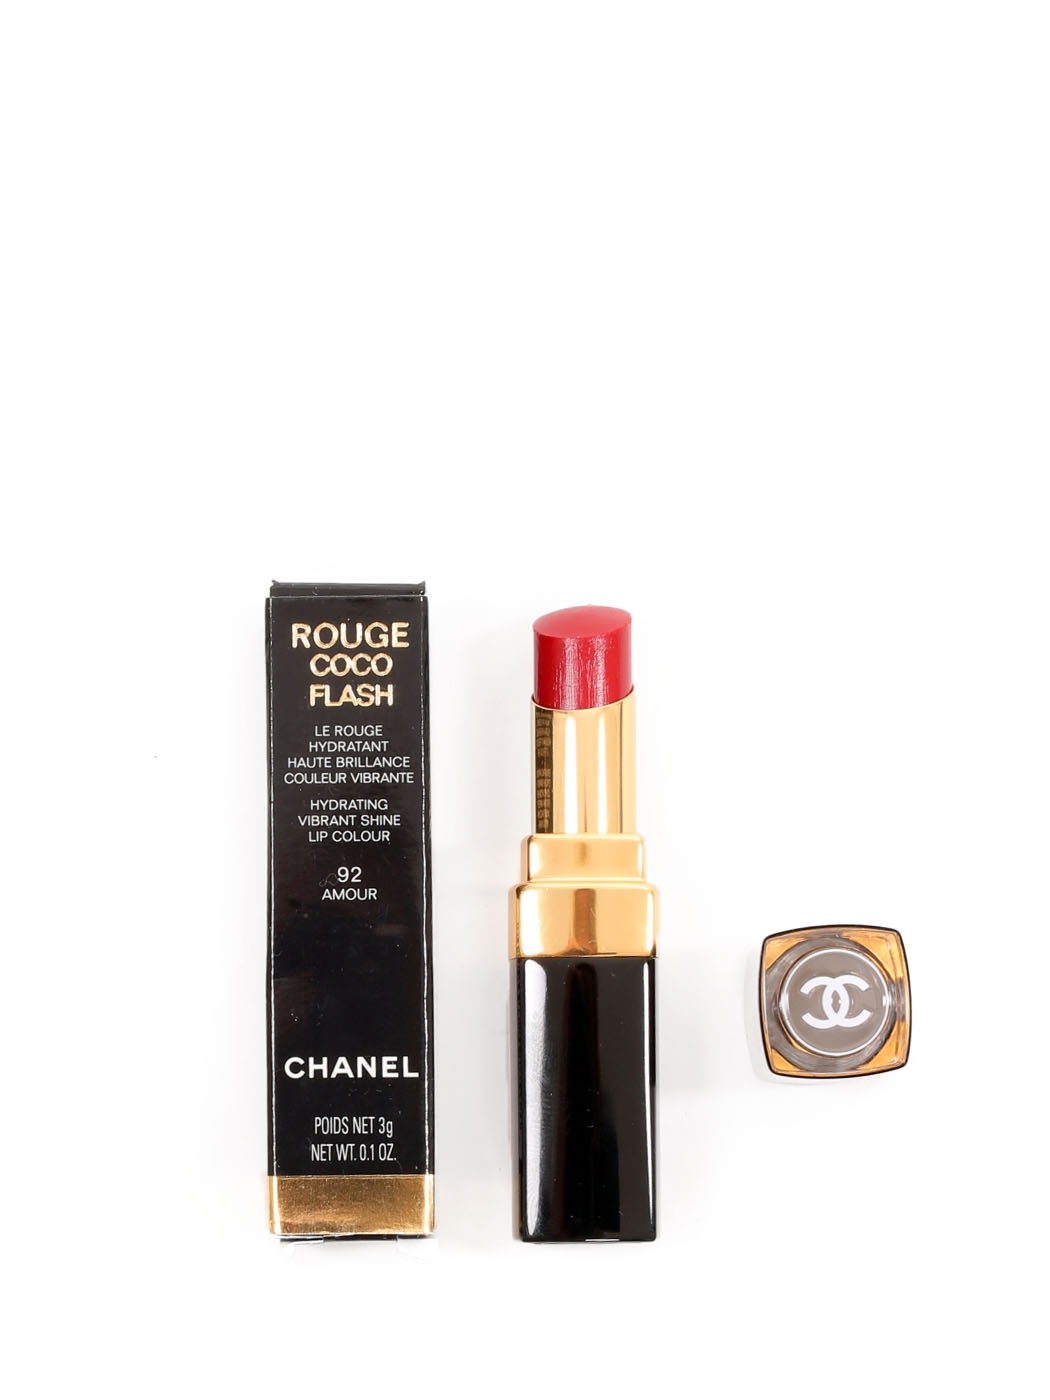 Chanel Rouge Coco Flash Hydrating Vibrant Shine Lip Colour - # 54 Boy 3g  Mens